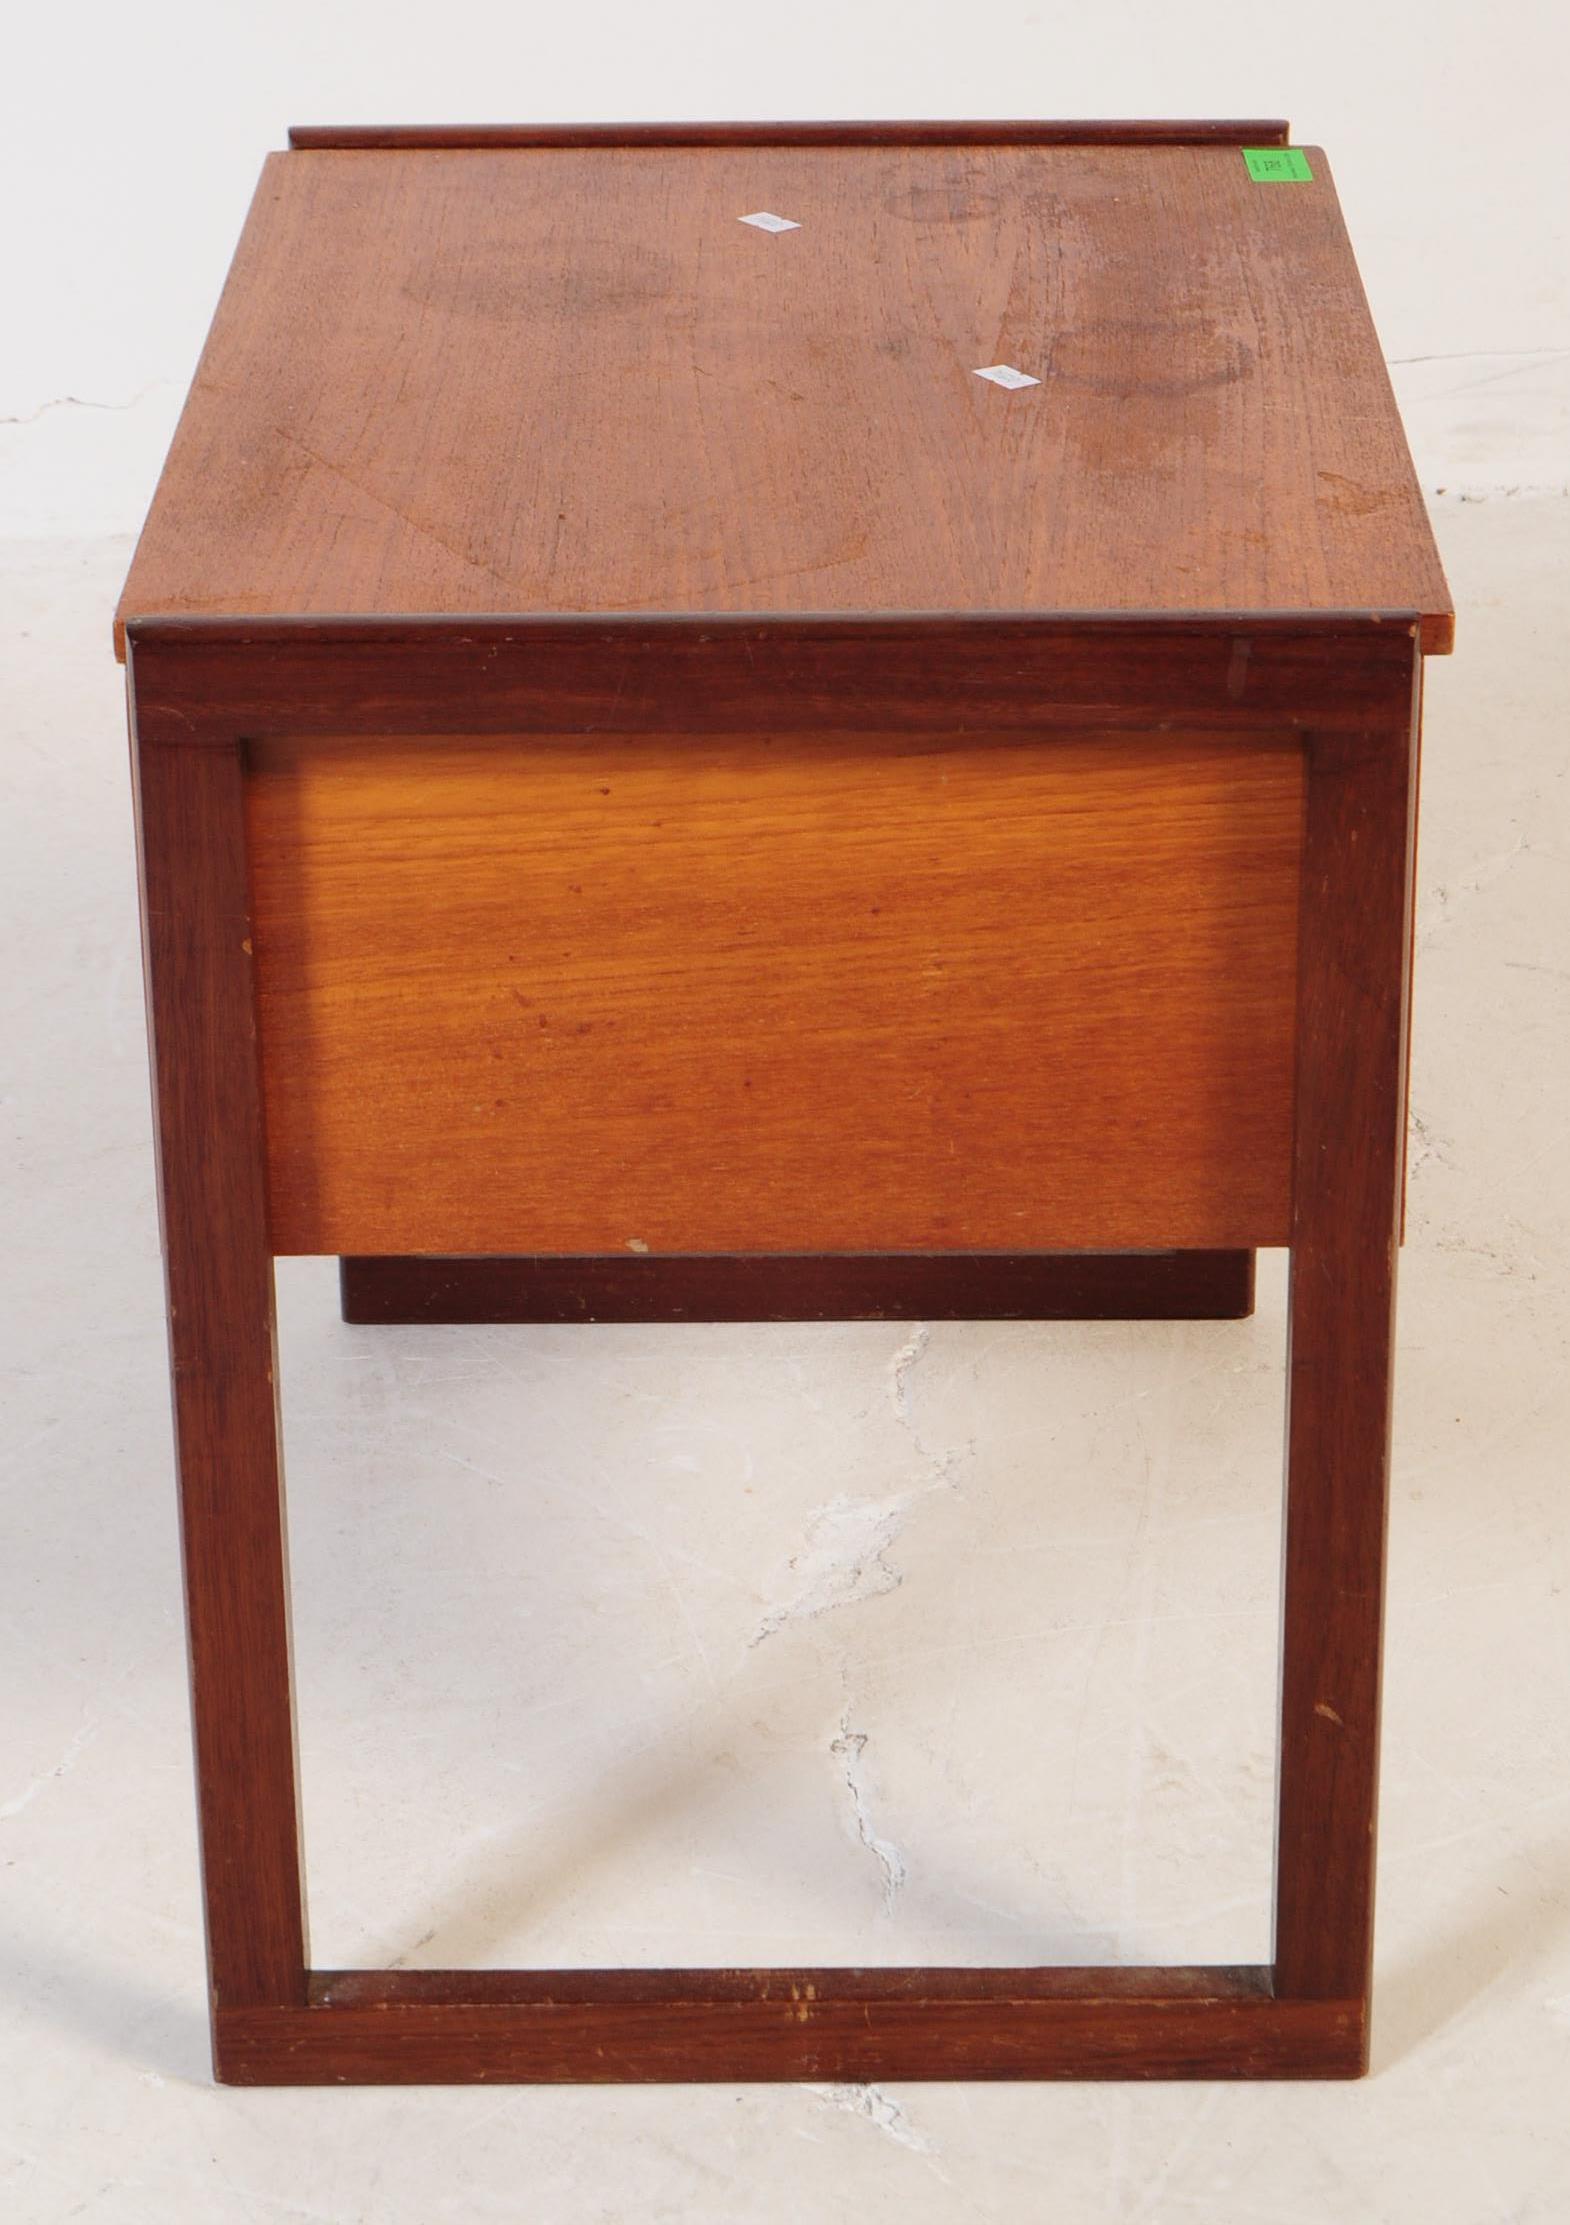 BRITISH MODERN DESIGN - RETRO MID 20TH CENTURY SEWING TABLE - Image 3 of 5